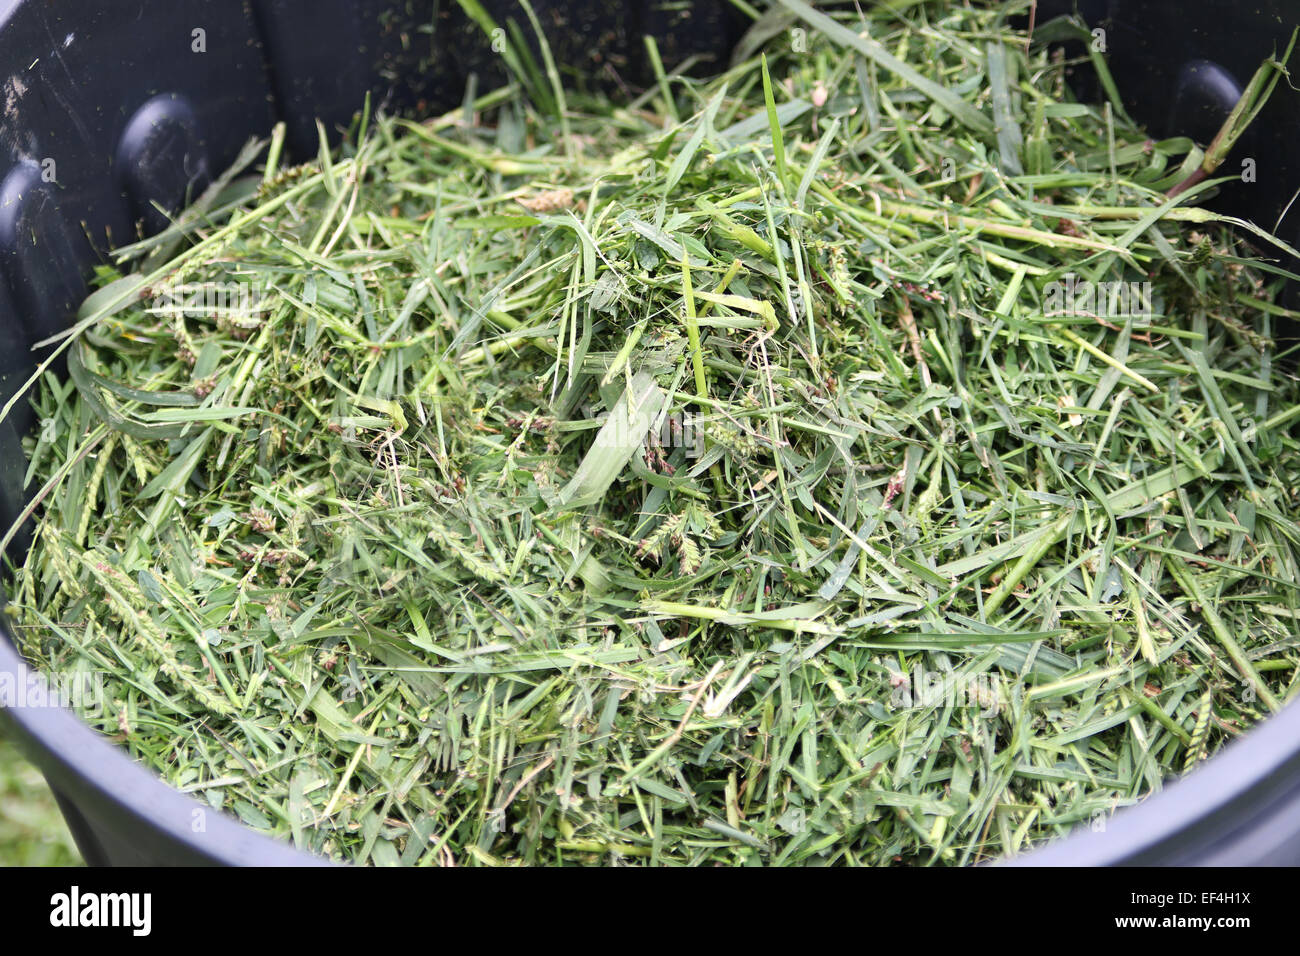 Fresh Grass Cuttings in compost bin Stock Photo